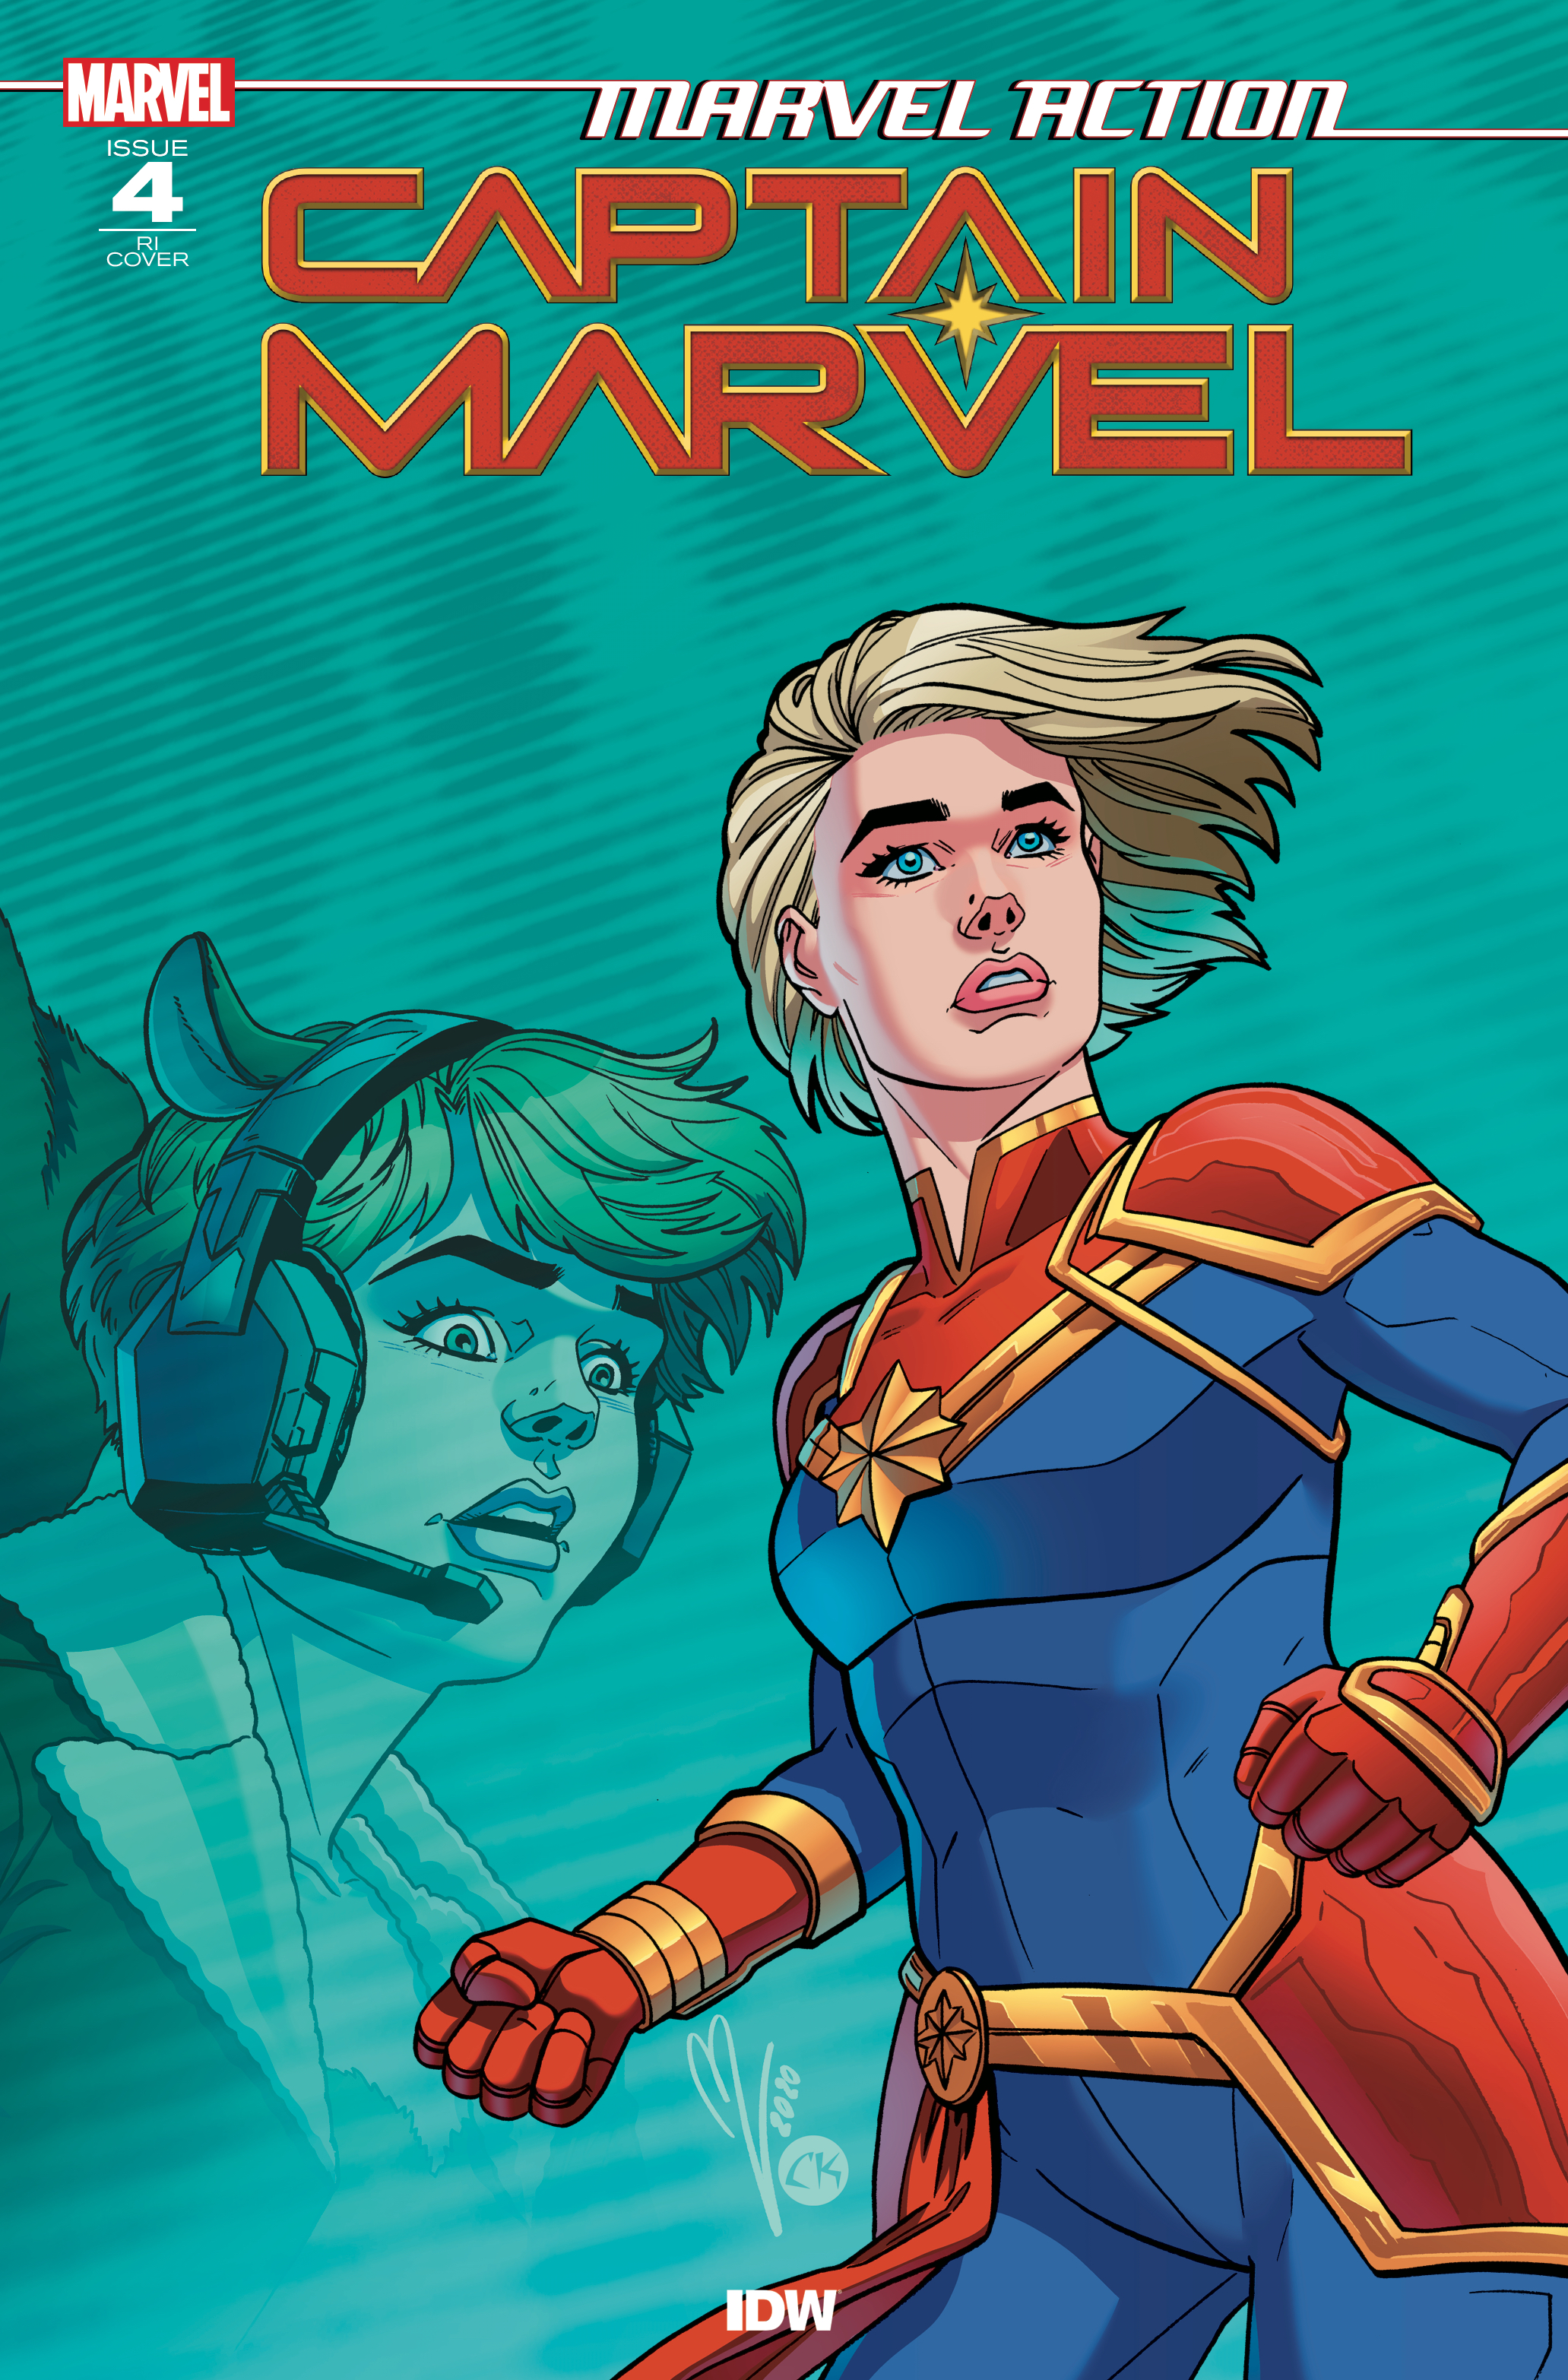 Marvel Action Captain Marvel #4 10 Copy Megan Levens Incentive Cover